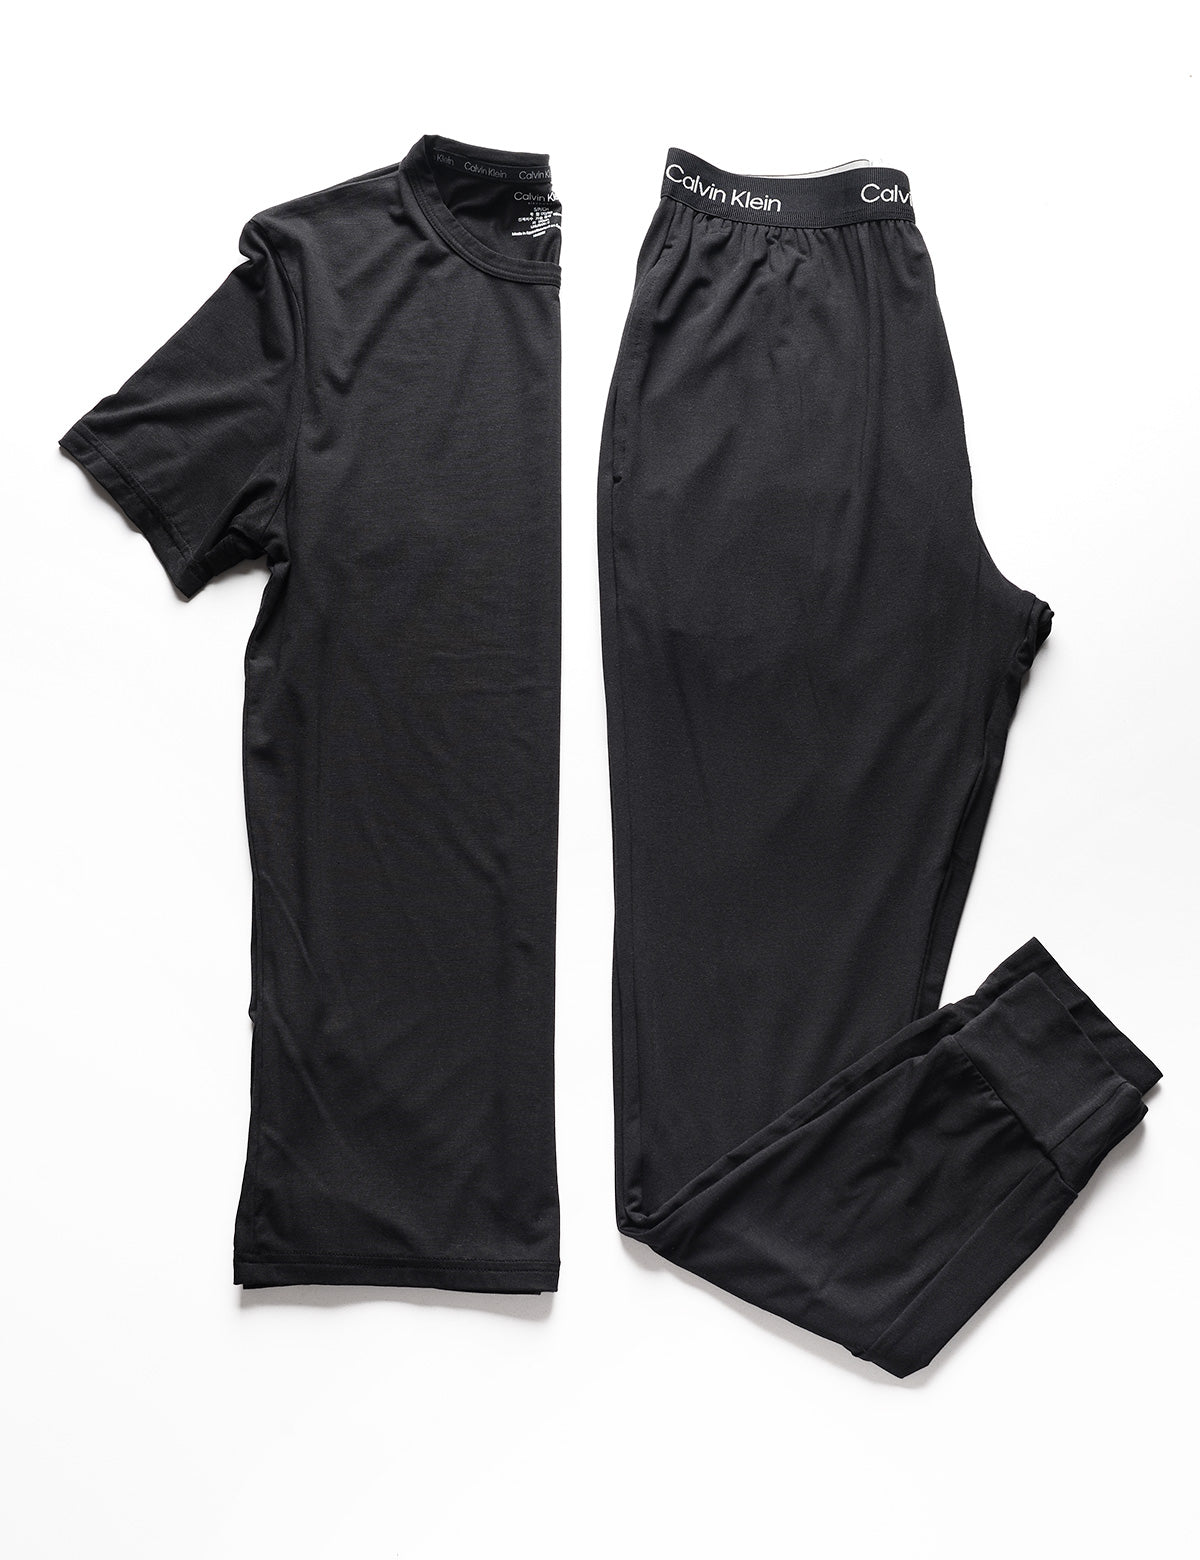 Photo of Ultra-Soft Modern Short Sleeve Crew Tee - Black next to black t-shirt